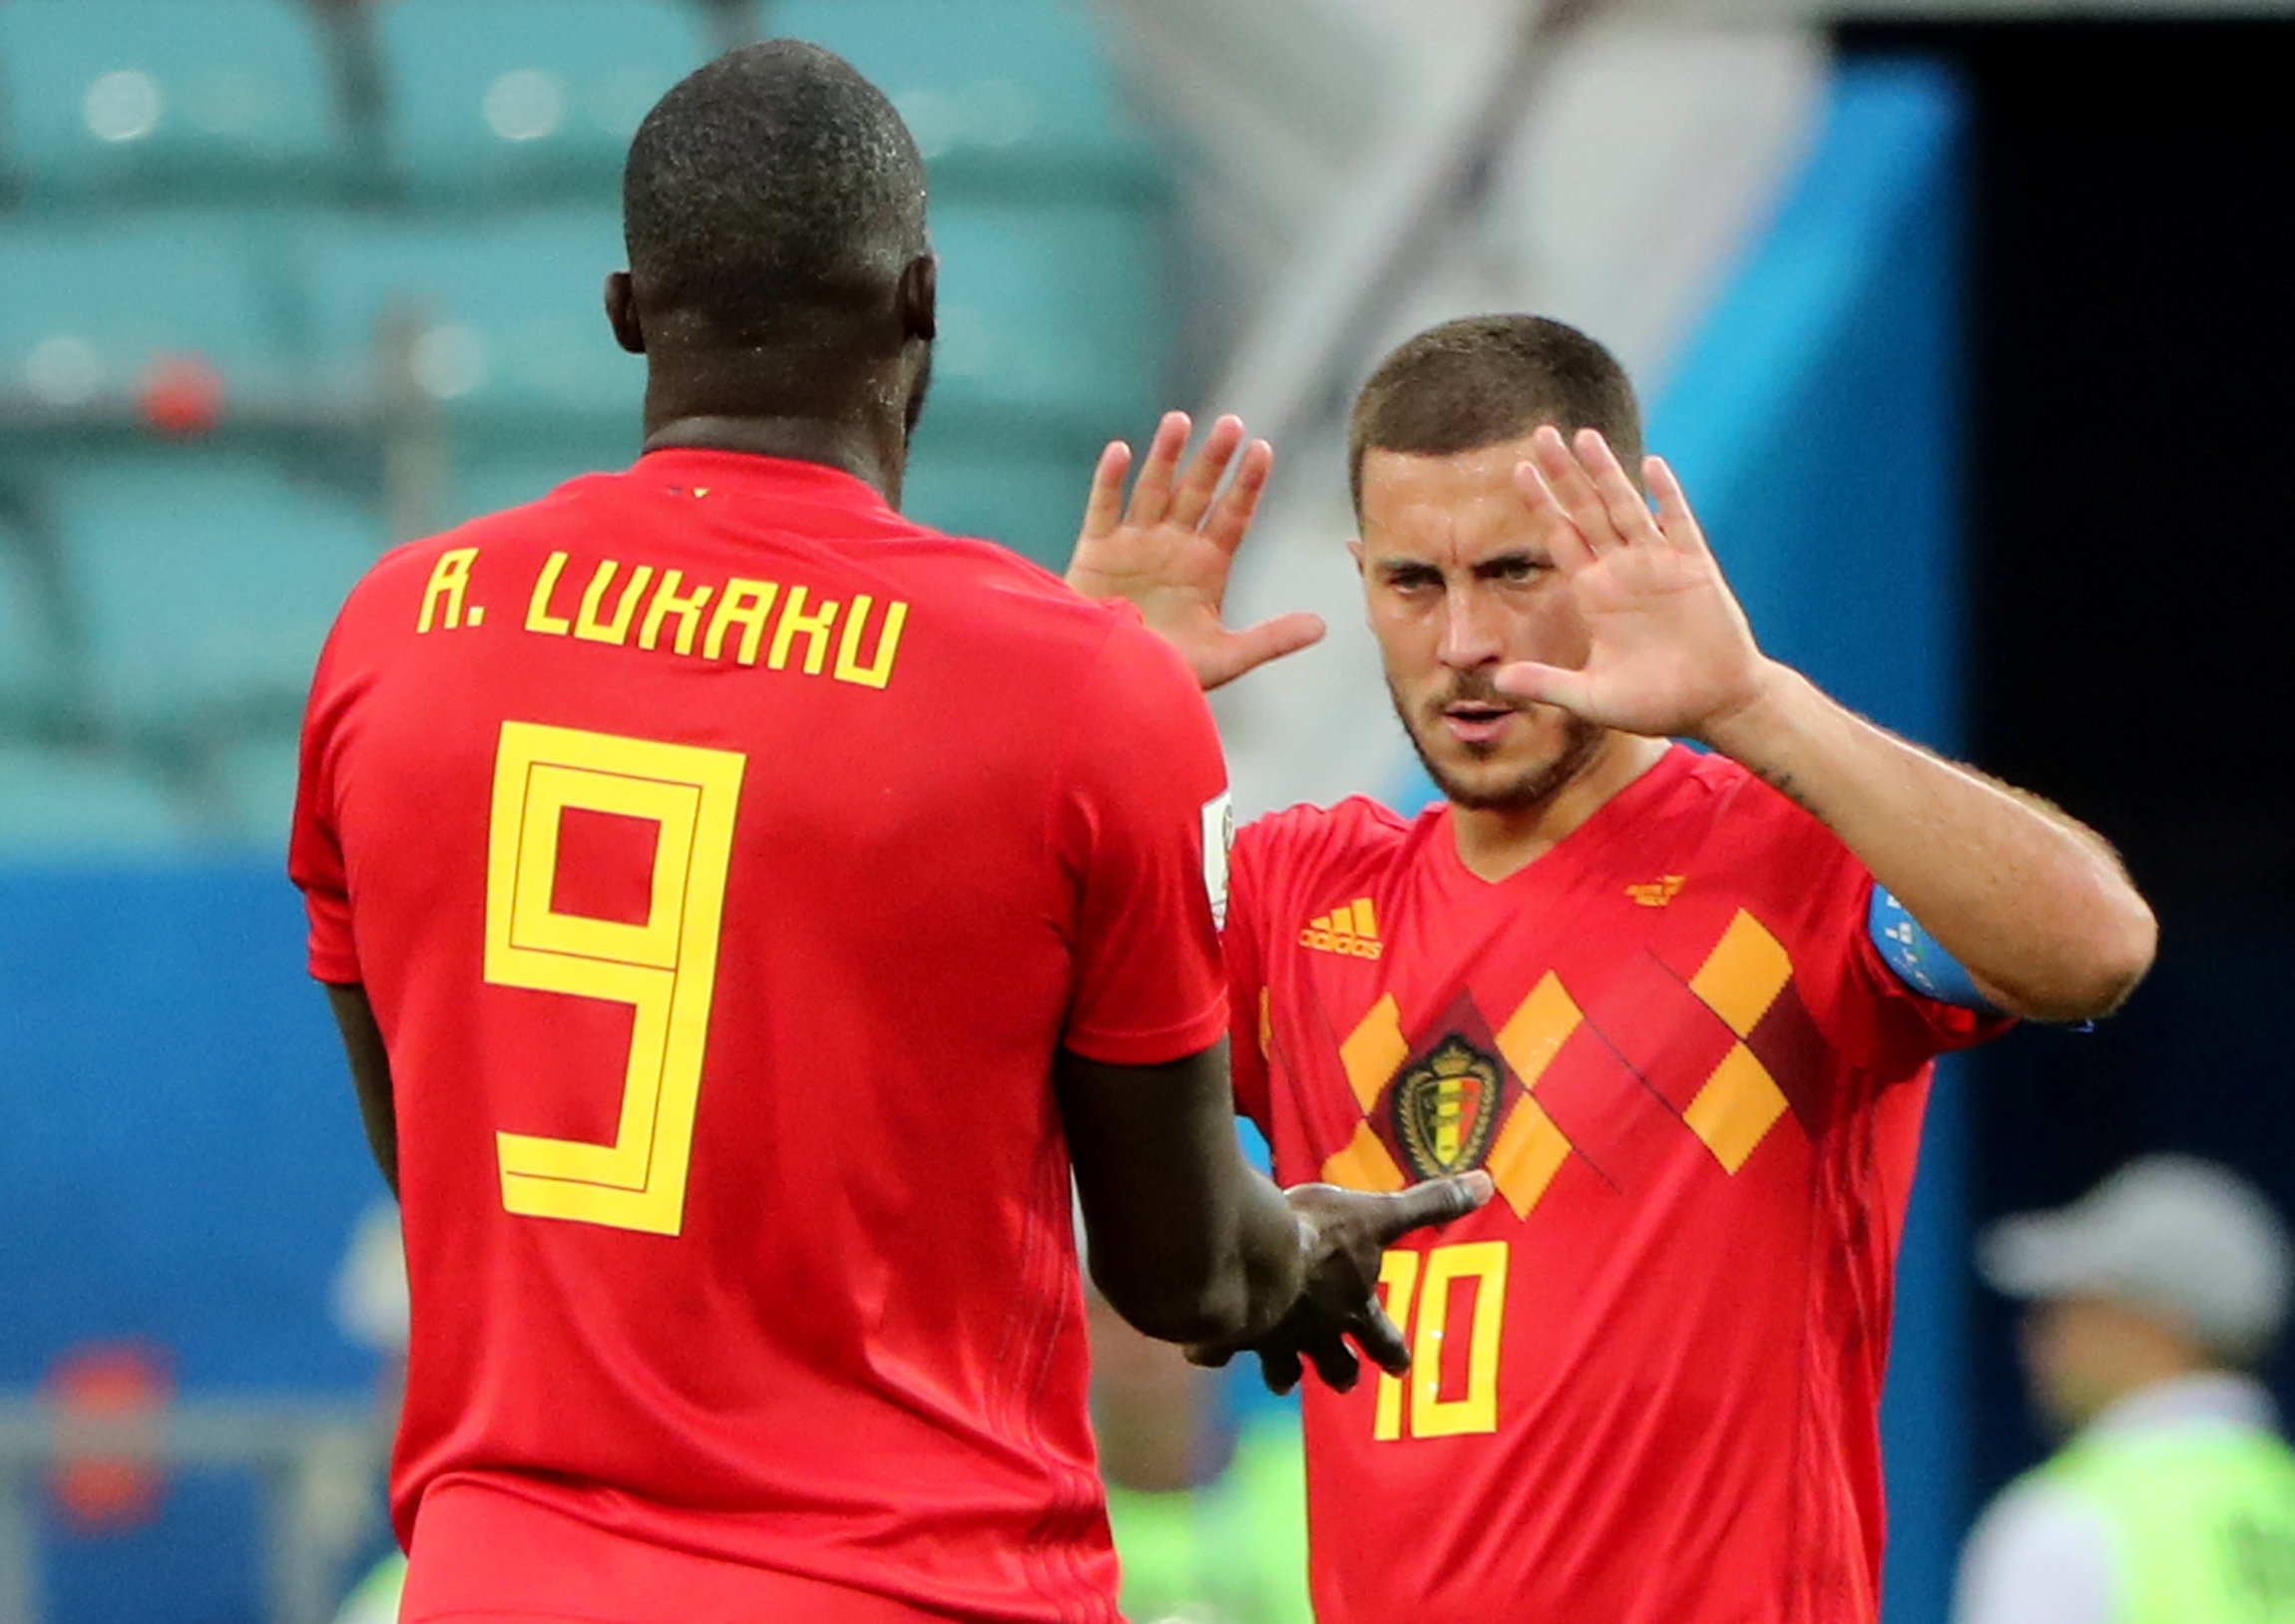 Football: Hazard warning fires hungry Lukaku up for glory